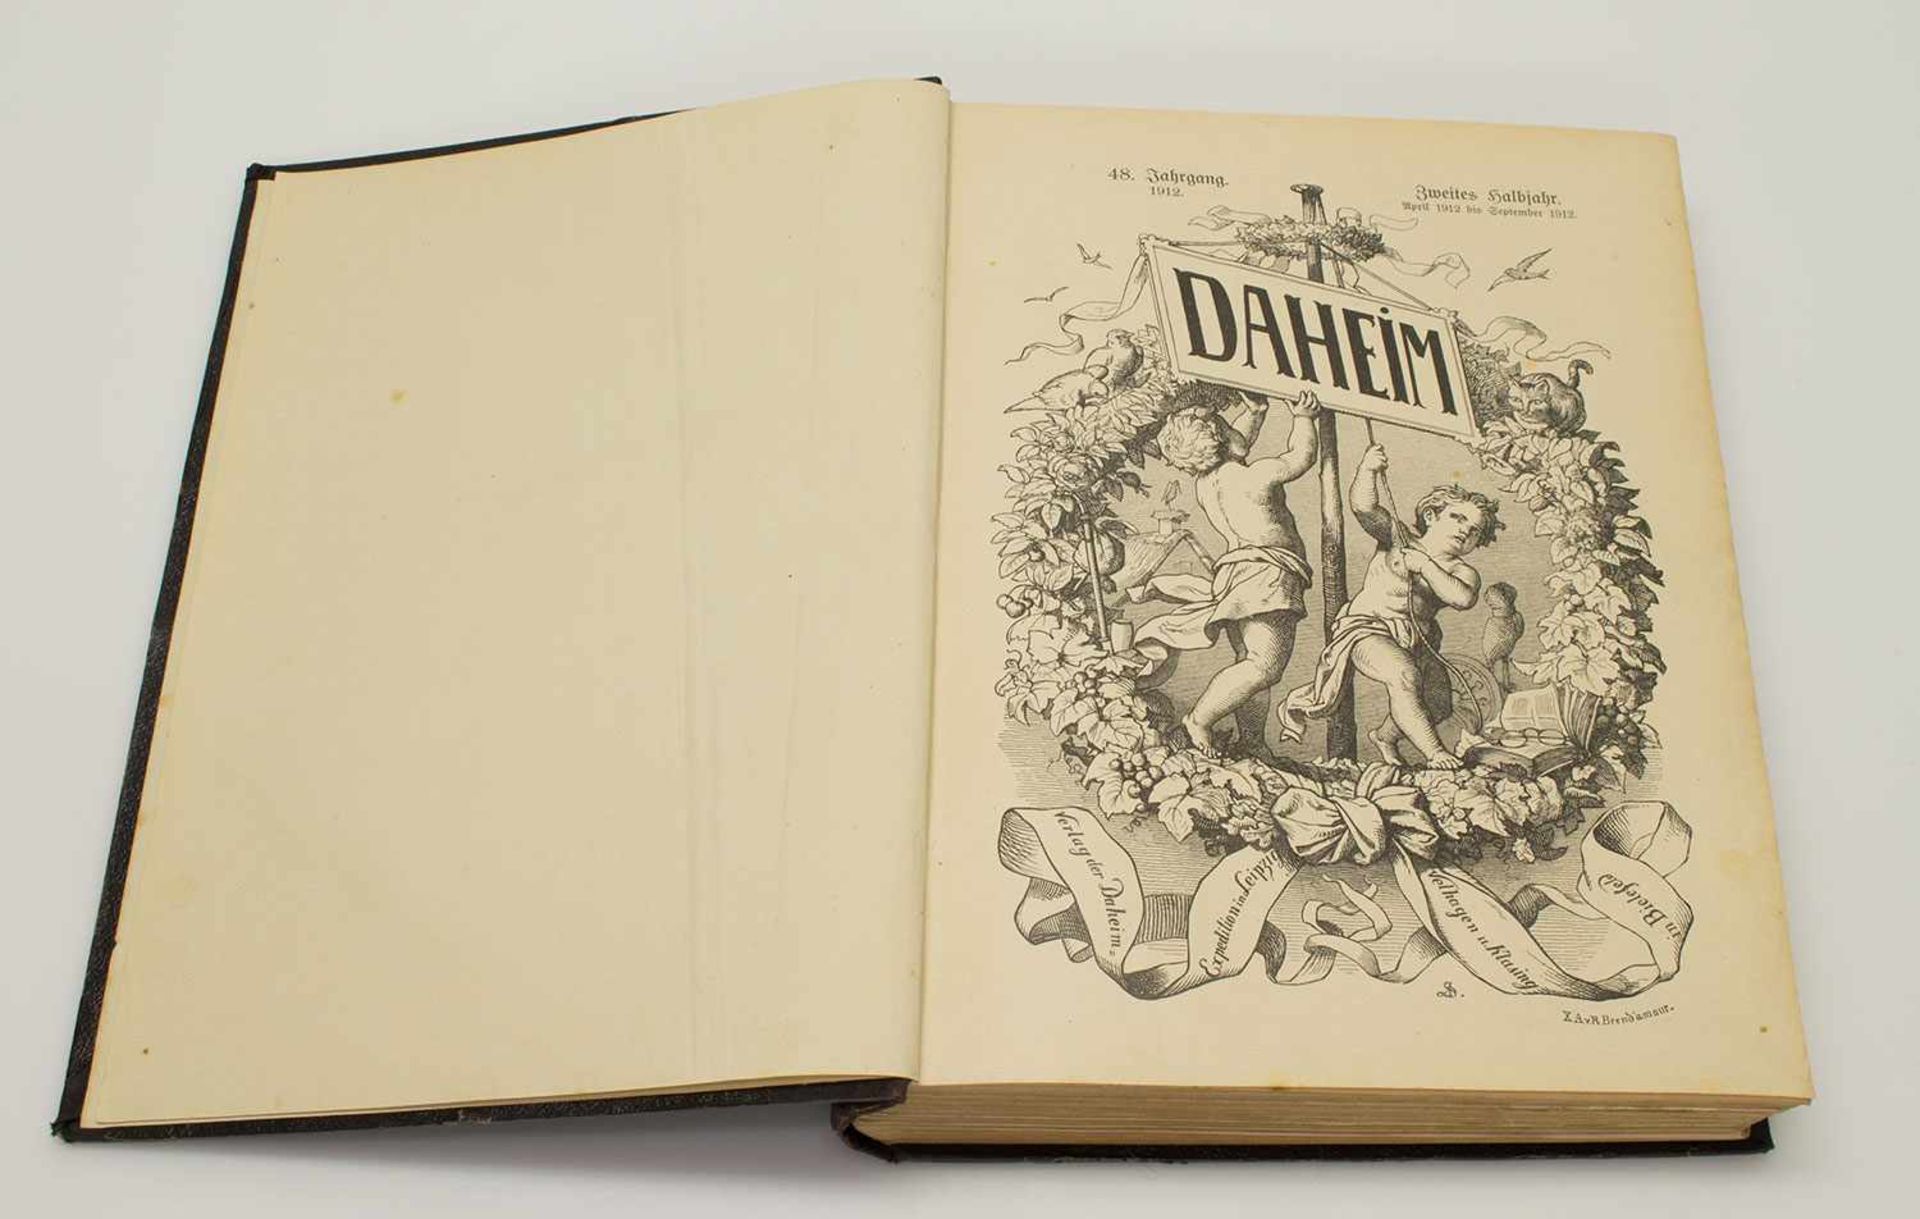 Herausgeber„Daheim-Kalender“, Velhagen & Klasing/ Berlin-Bielefeld 1912, 48. Jahrgang April-